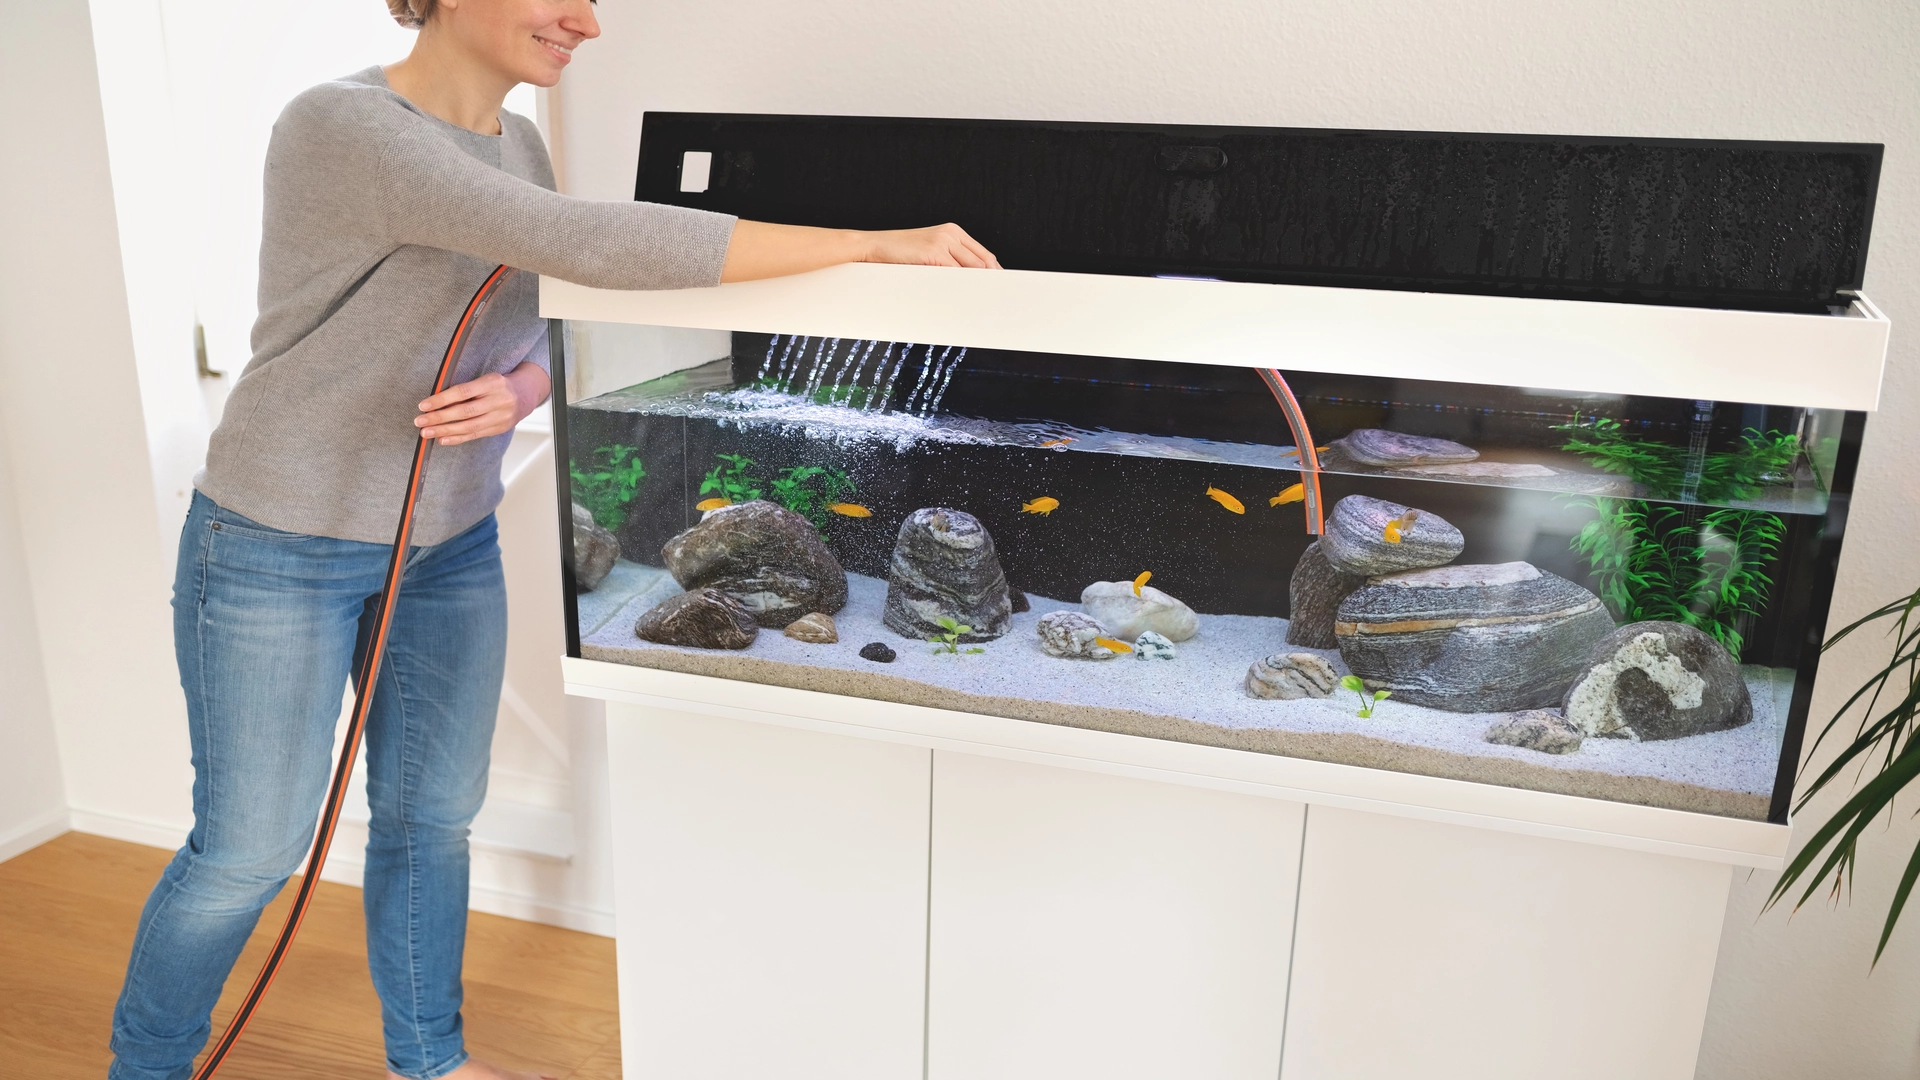 Basement Playroom Ideas: A woman cleaning the aquarium 